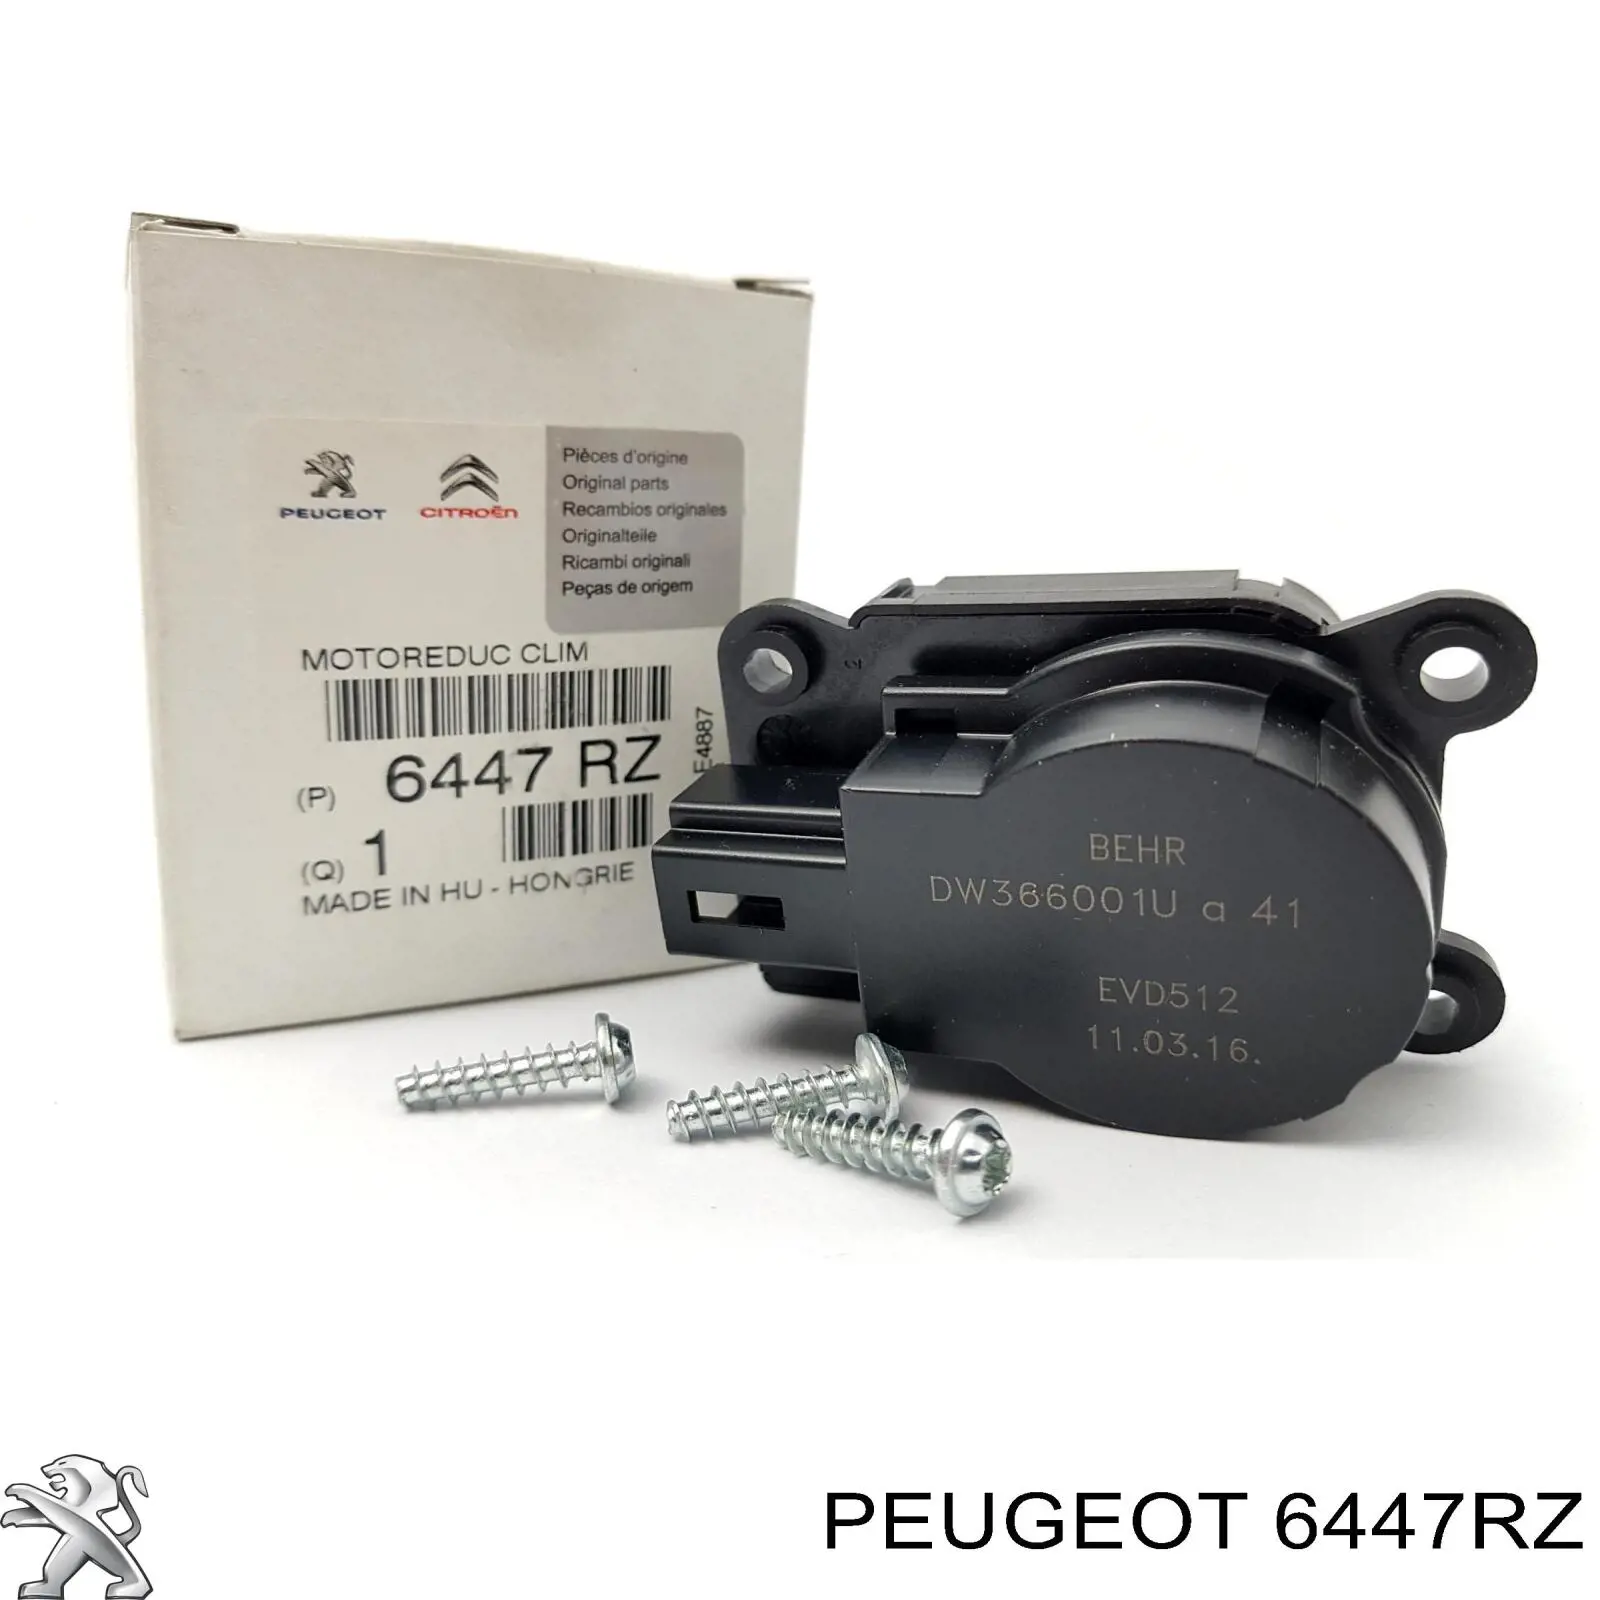 6447RZ Peugeot/Citroen motor de nivelacion calefaccion climatica ventilacion